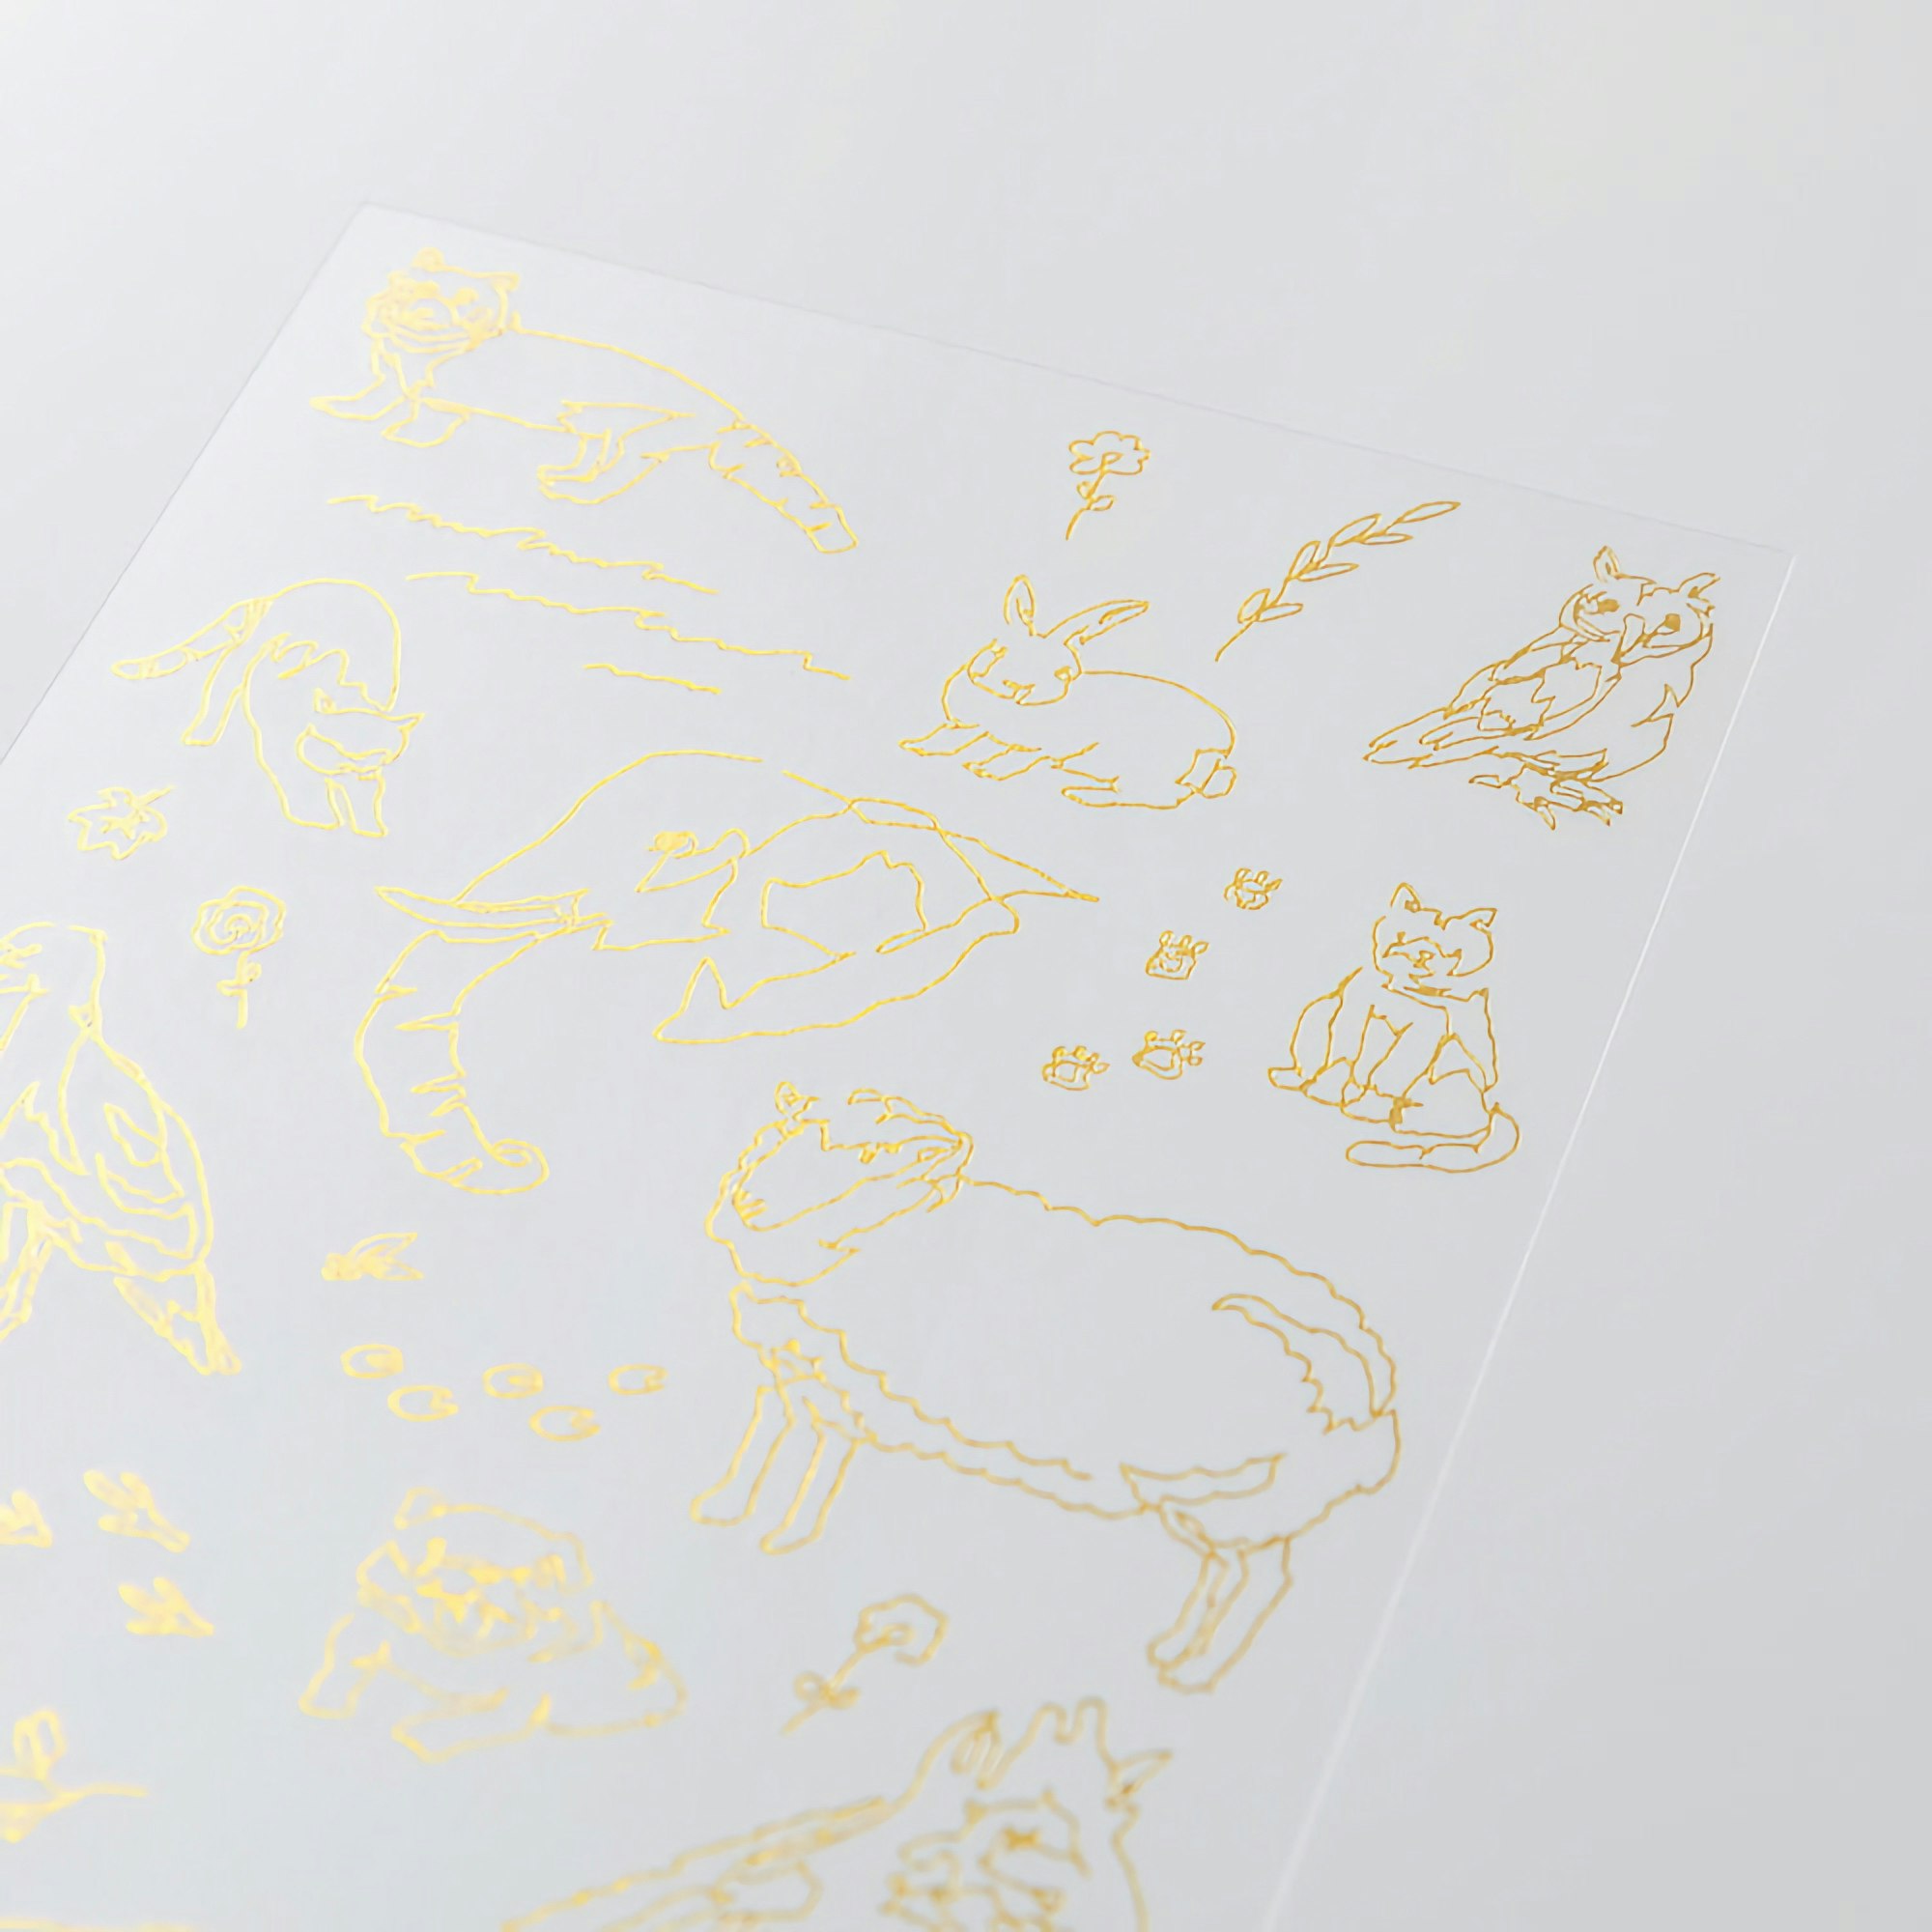 Midori Transfer Sticker Foil Land animals